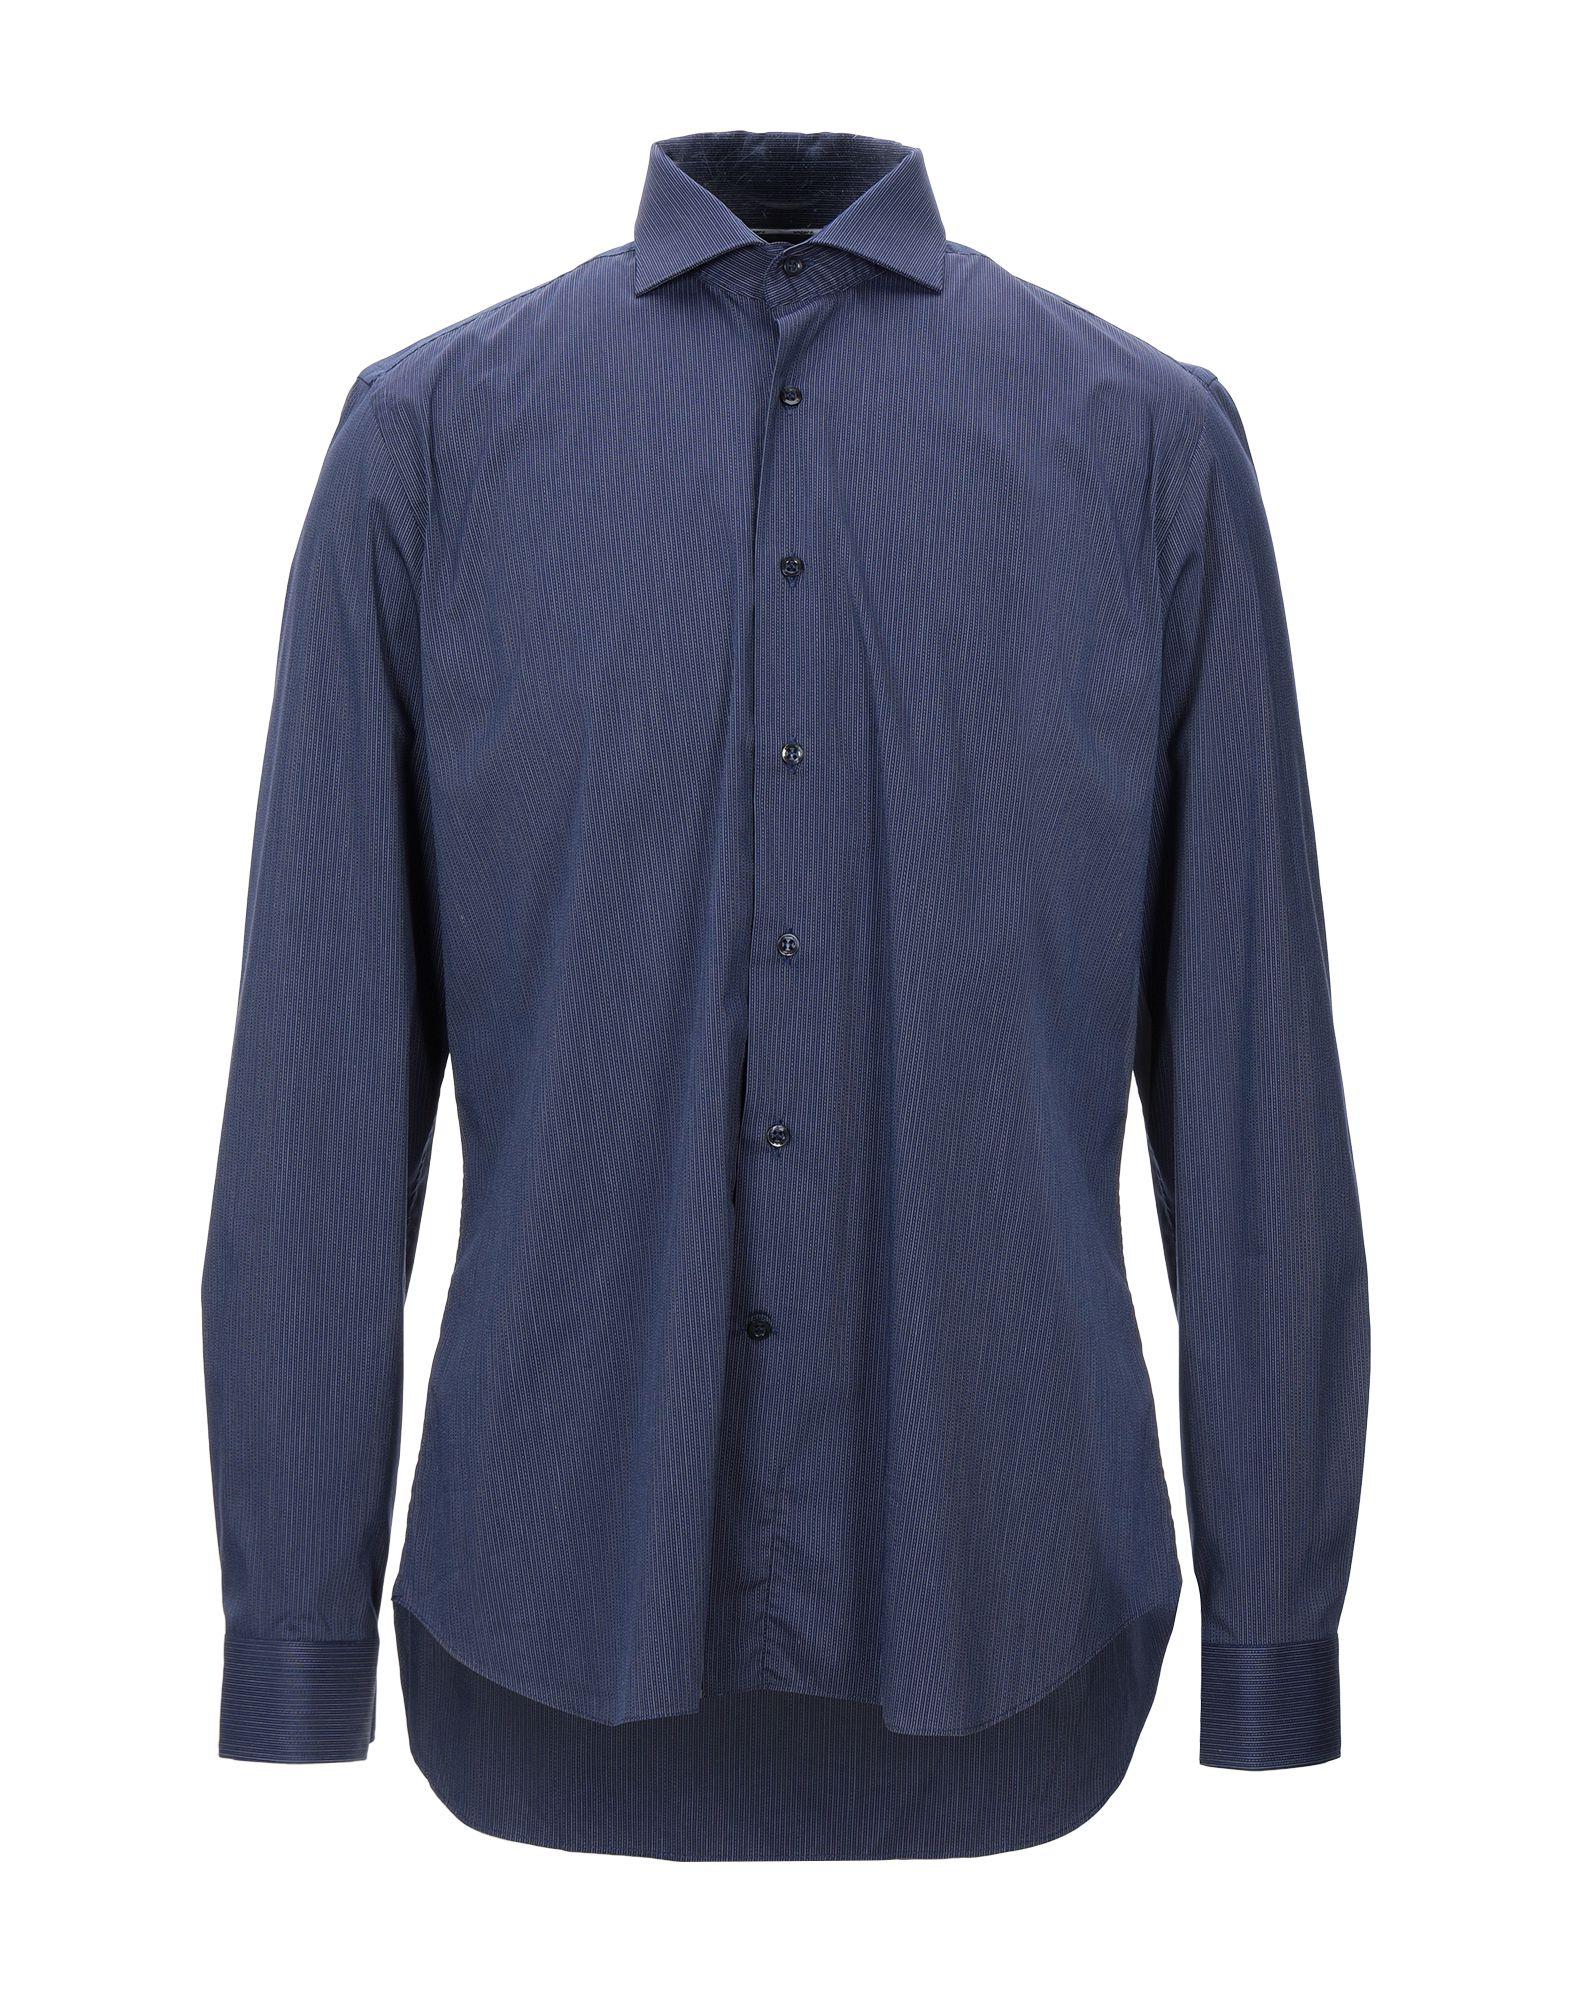 Emanuel Ungaro Cotton Shirt in Dark Blue (Blue) for Men - Lyst